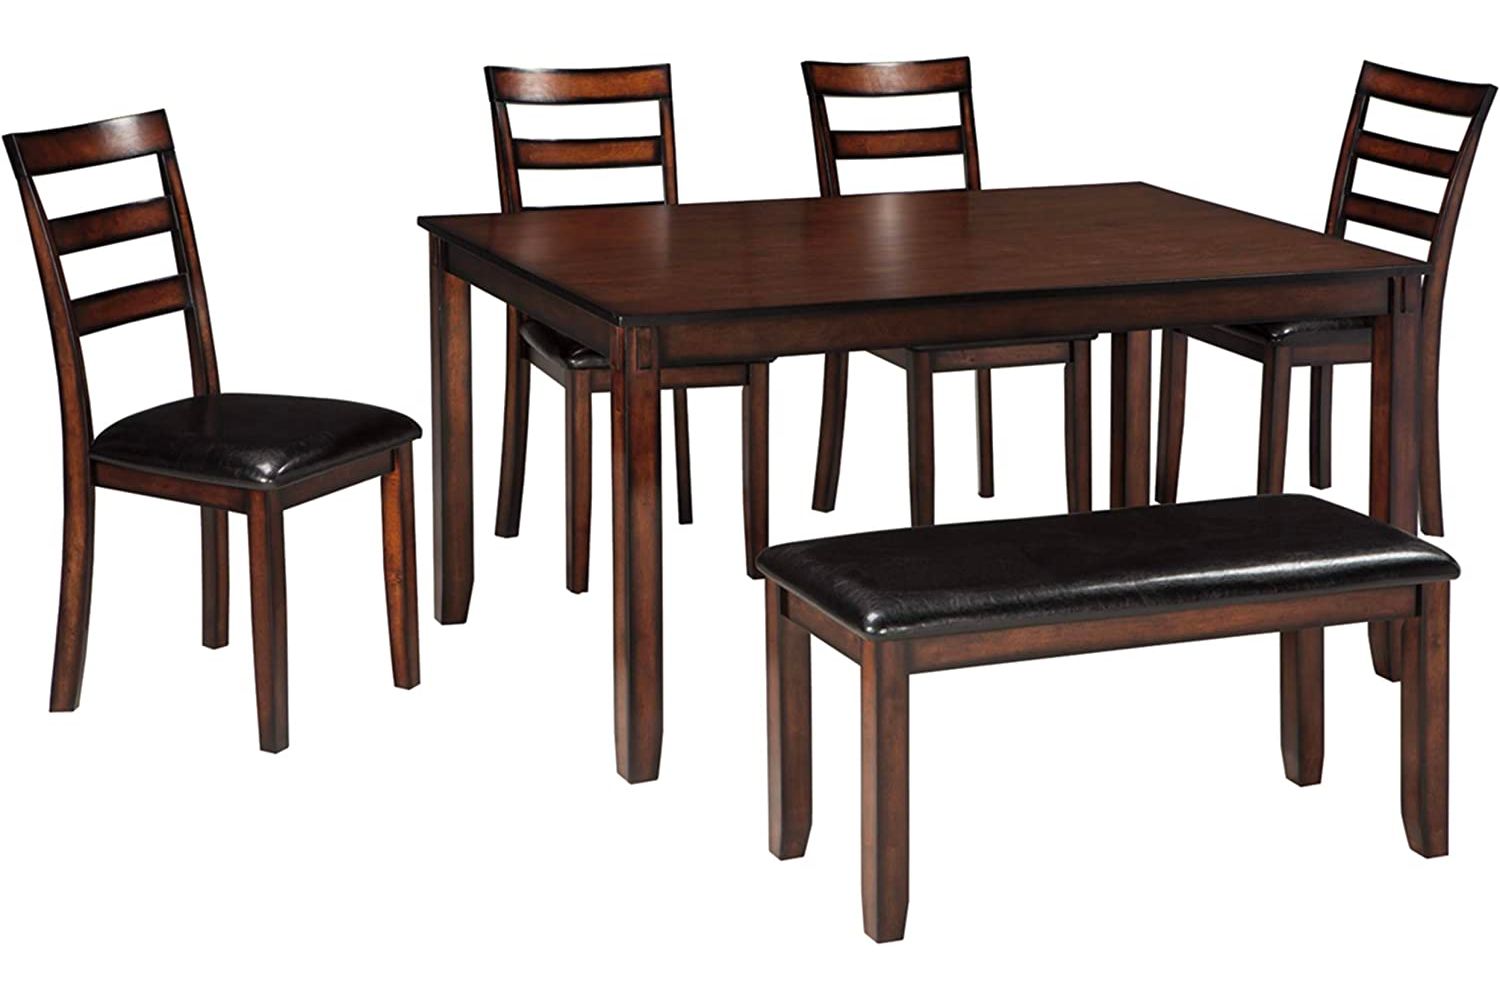 The Best Furniture Deals Option: Signature Design by Ashley Coviar 6 Piece Dining Set